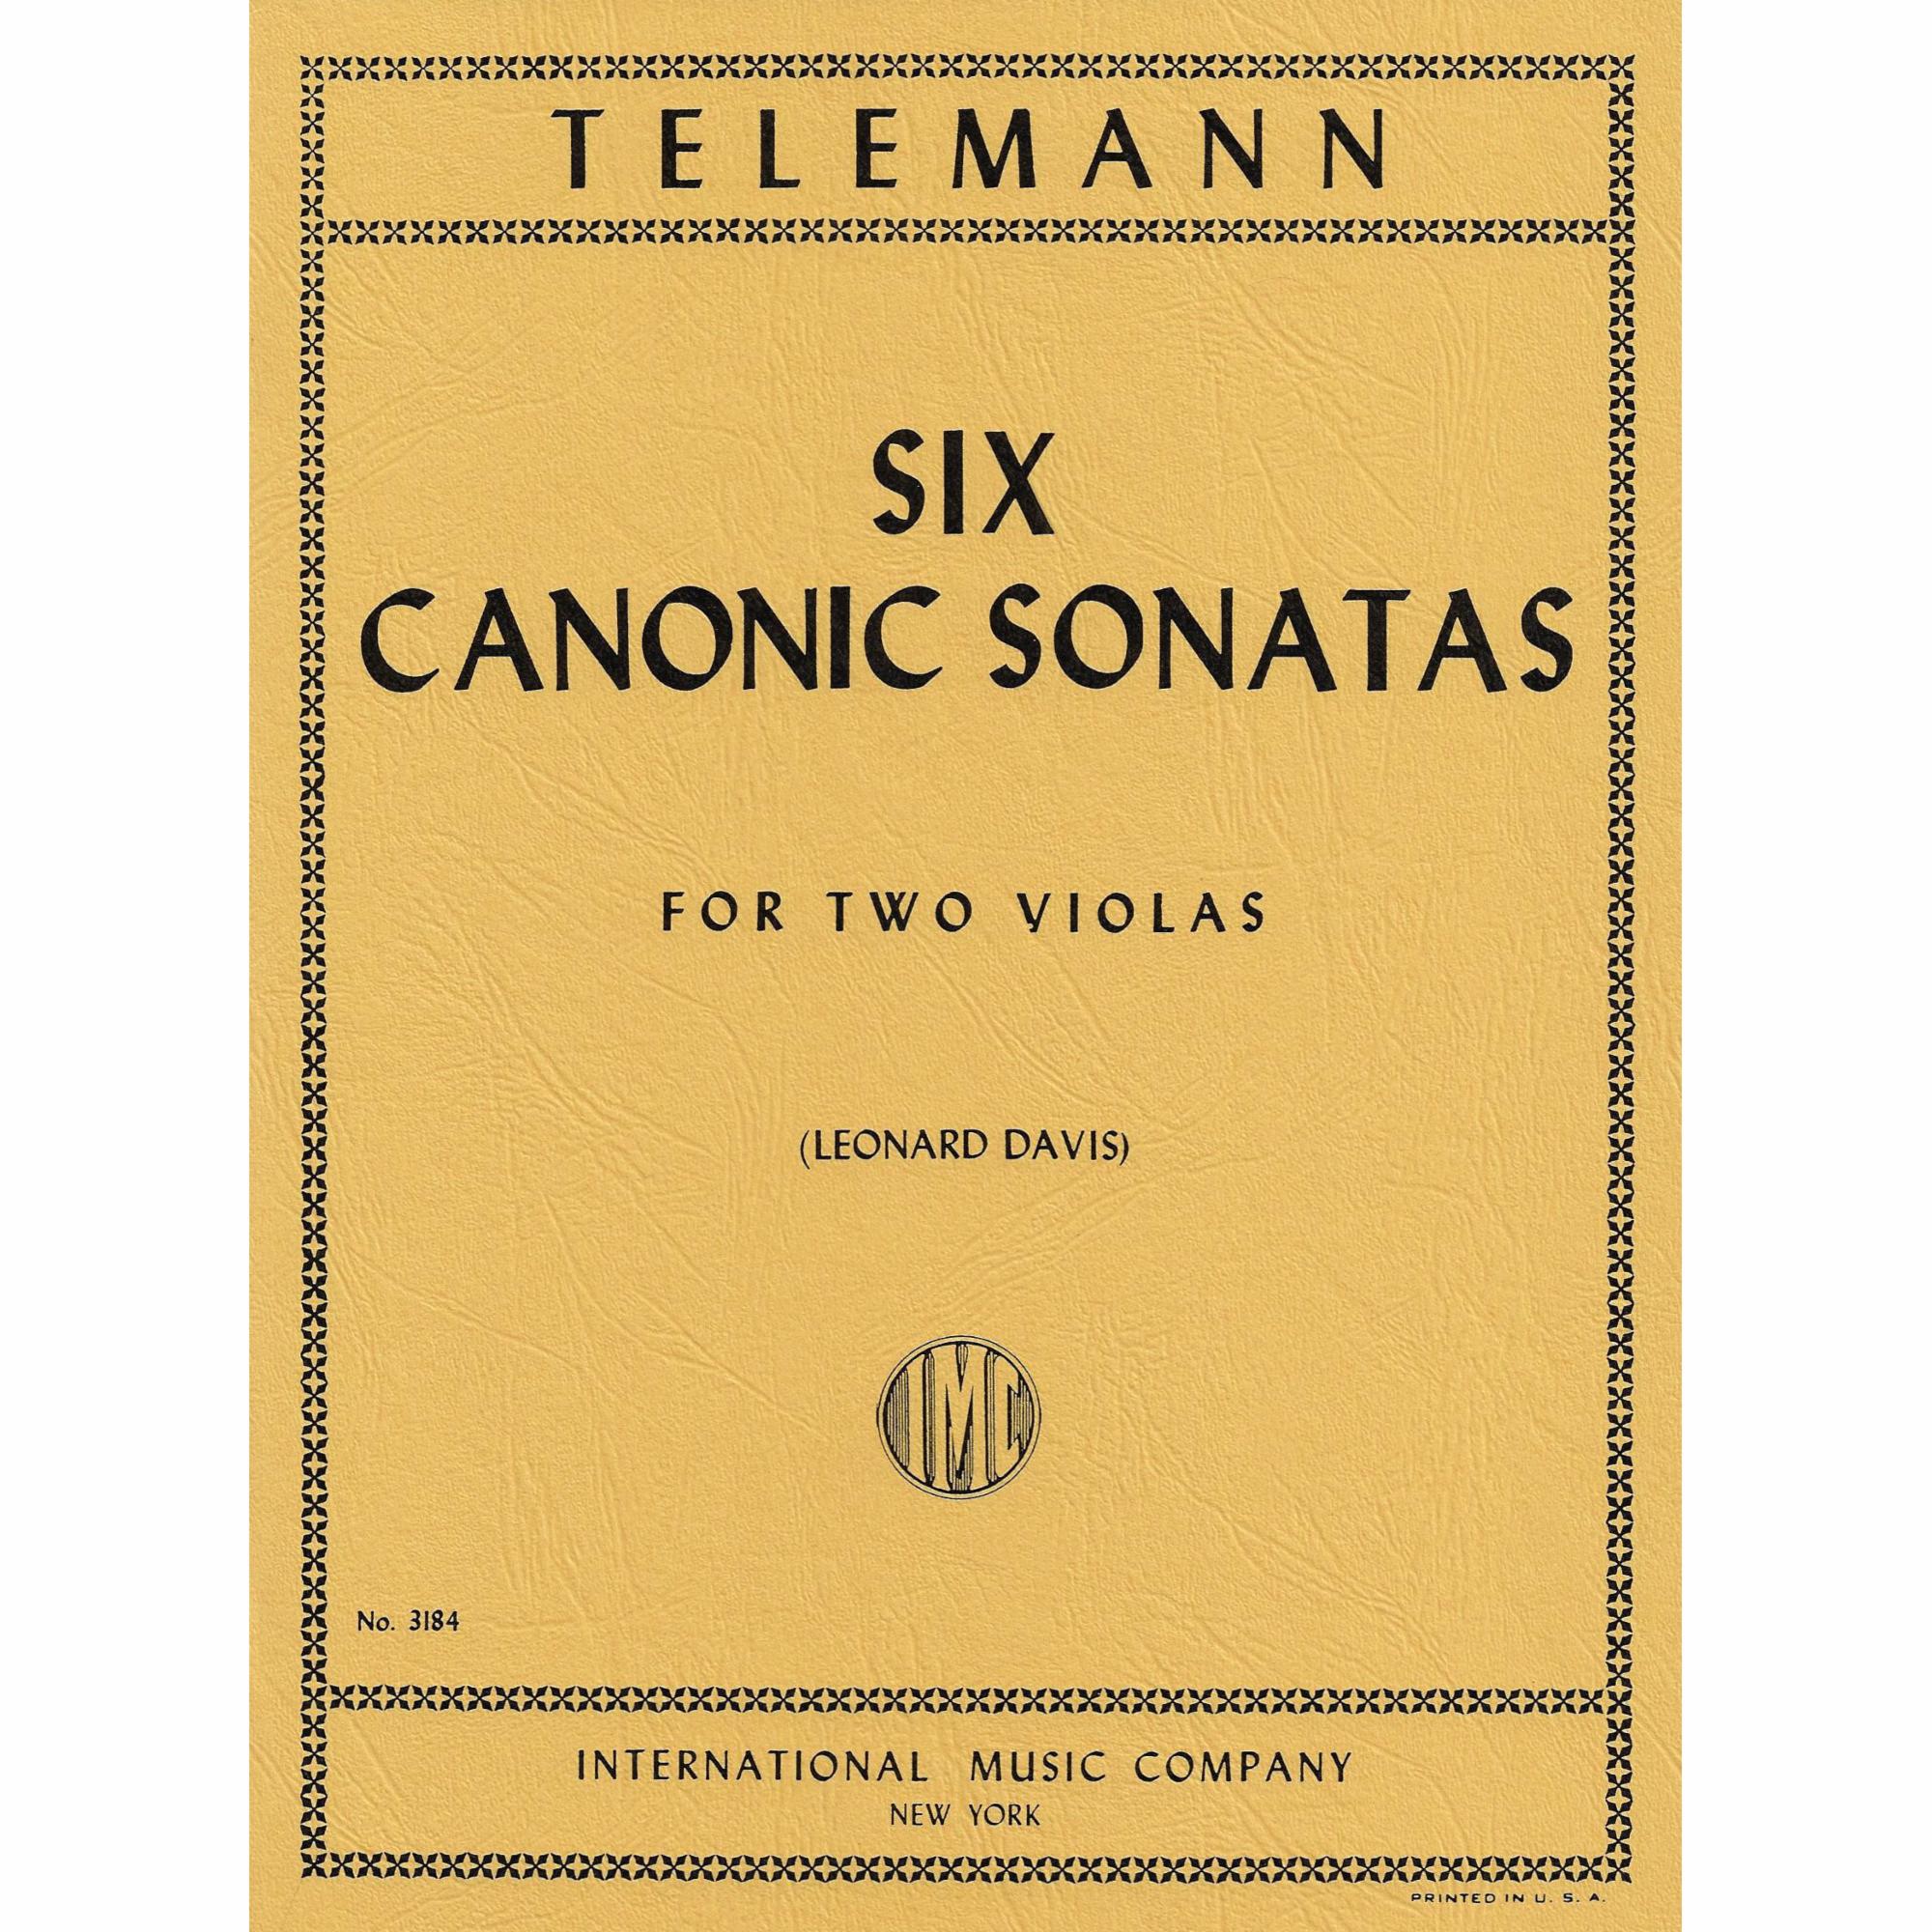 Telemann -- Six Canonic Sonatas for Two Violas